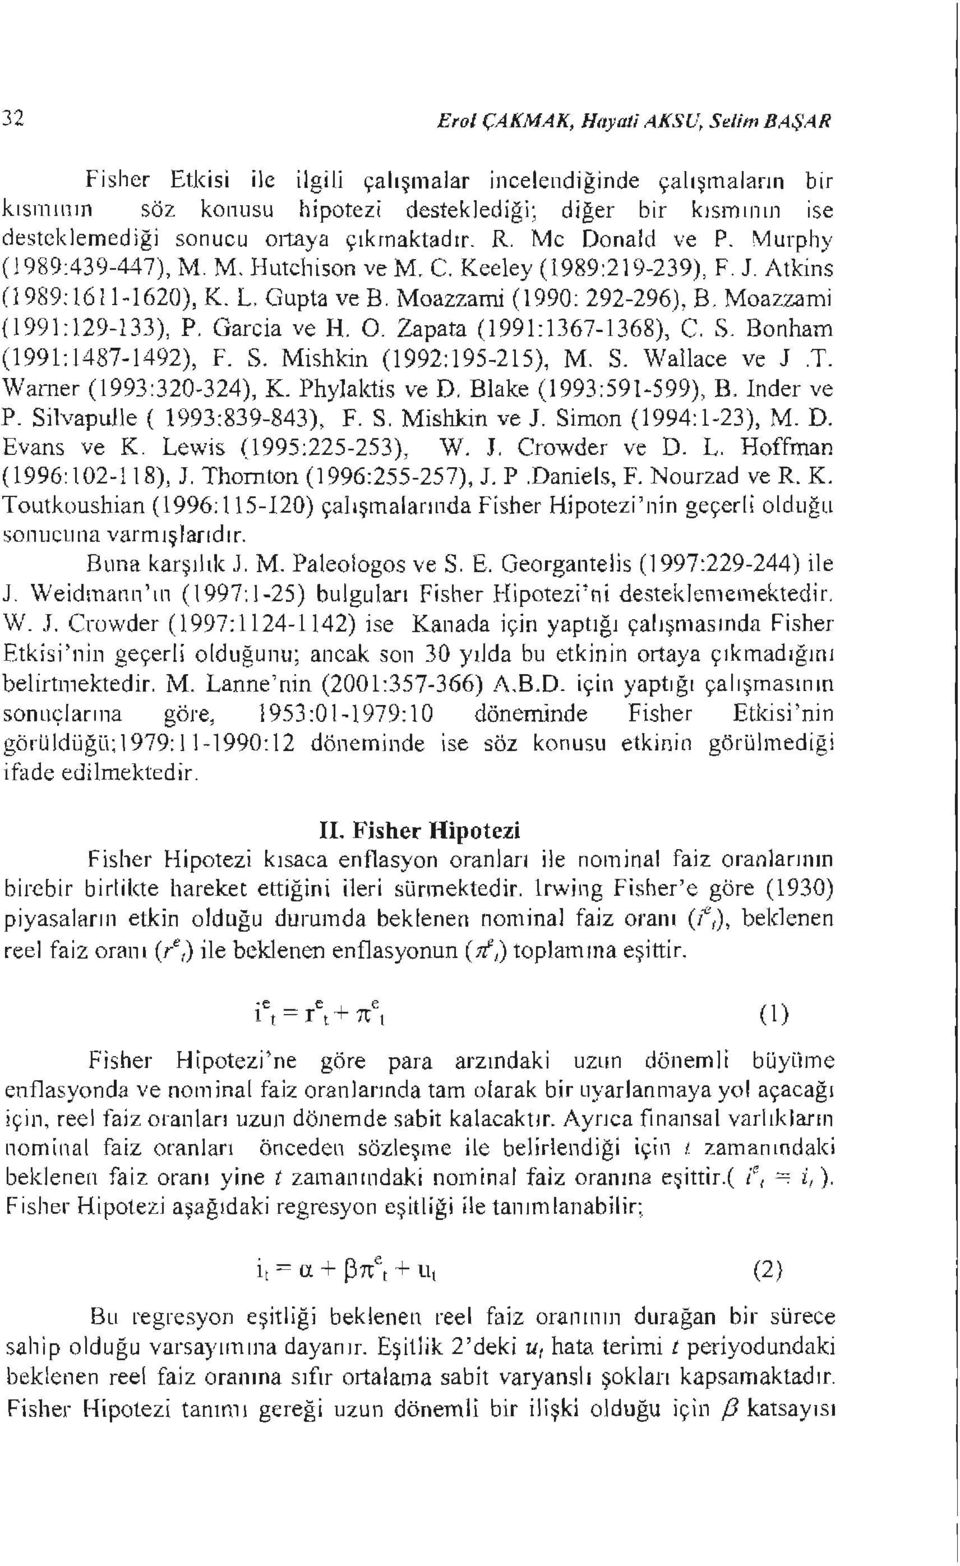 Moazzami (1990: 292-296), R Moazz<ımi 0991:129-133), P. Garcia ve H. O. Zapata (1991:1367-1368), C. S. Bonham (1991:1487-1492), F. S. Mishkin (1992:195-215), M. S. Wallace ve J.T.